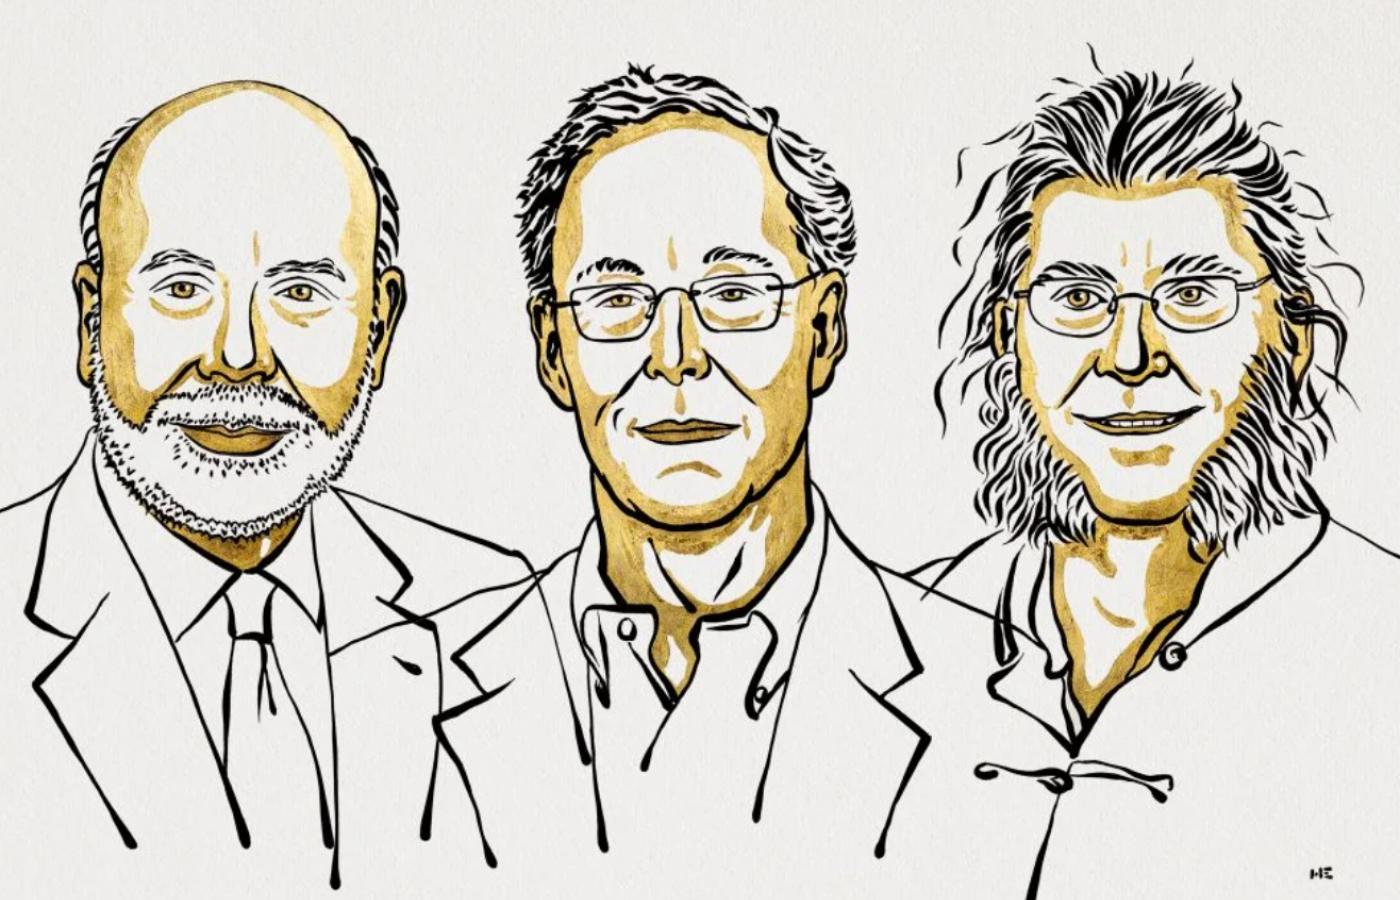 Bernanke, Diamond i Dybvig, laureaci nagrody Sveriges Riksbank, tzw. ekonomicznego Nobla